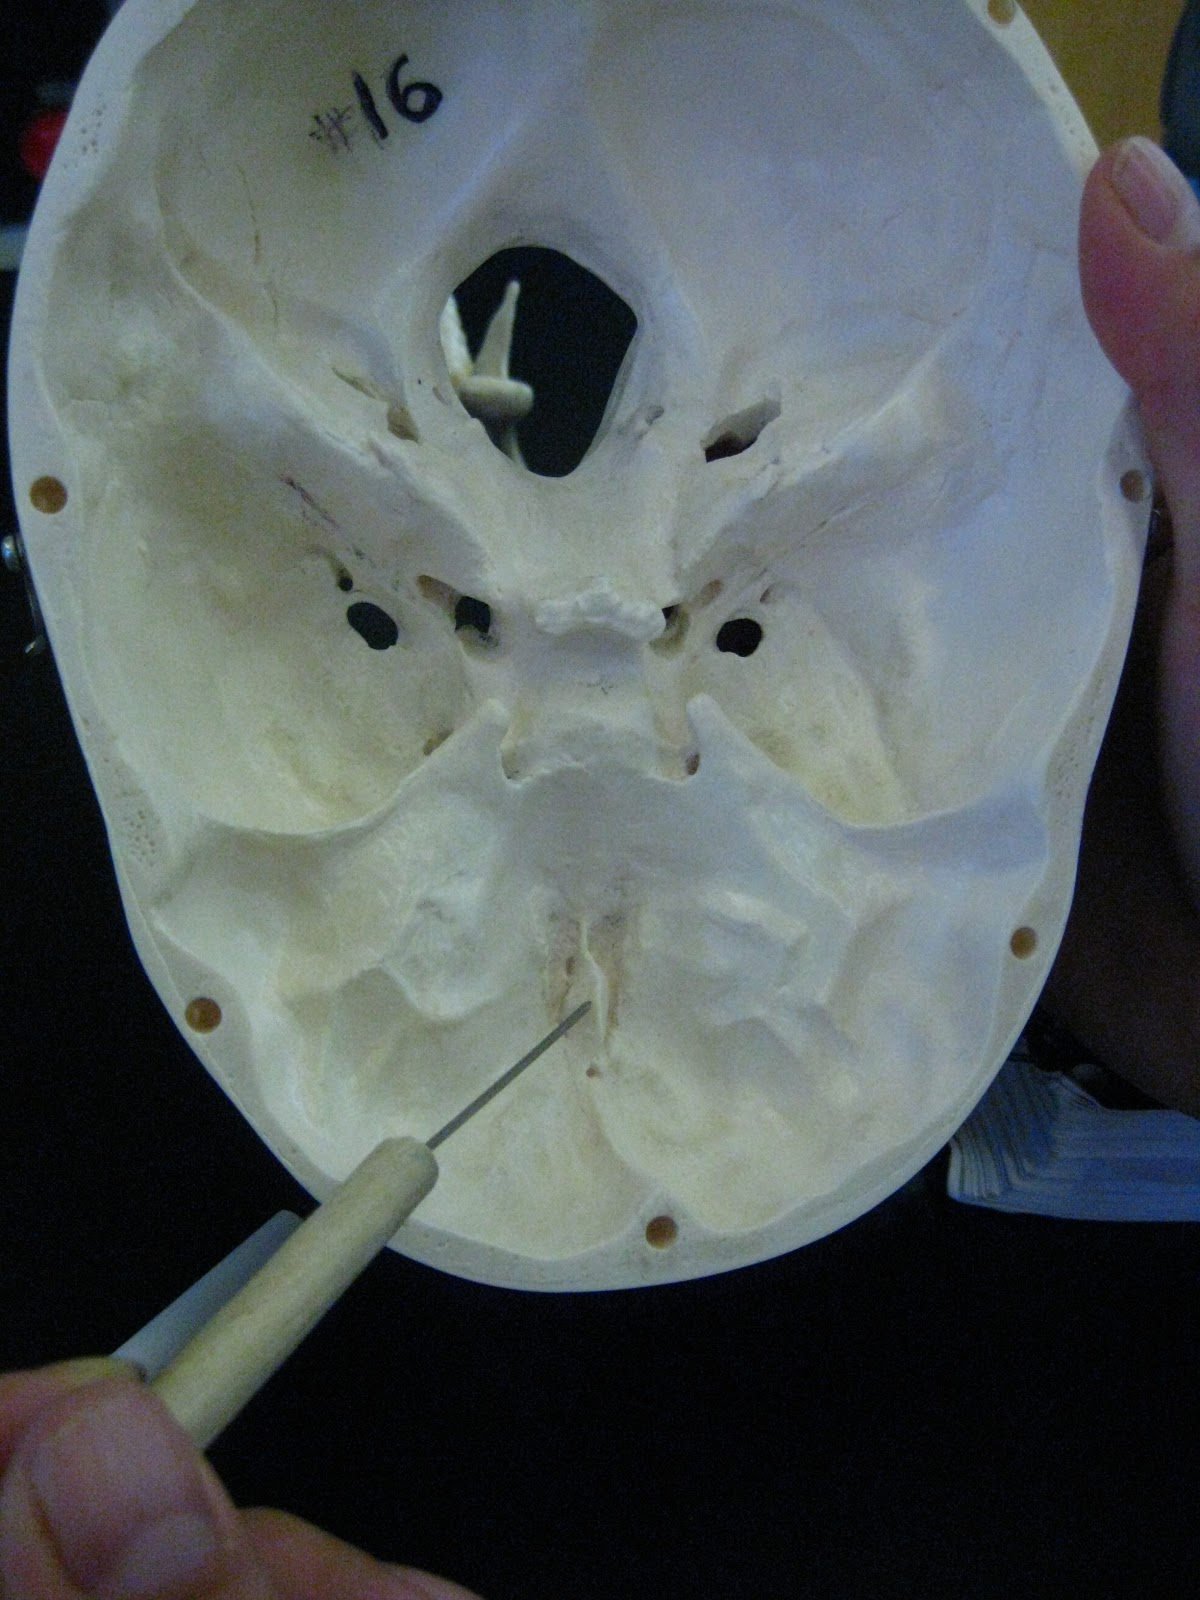 Boned: Human Skull - crista galli (of ethmoid bone)